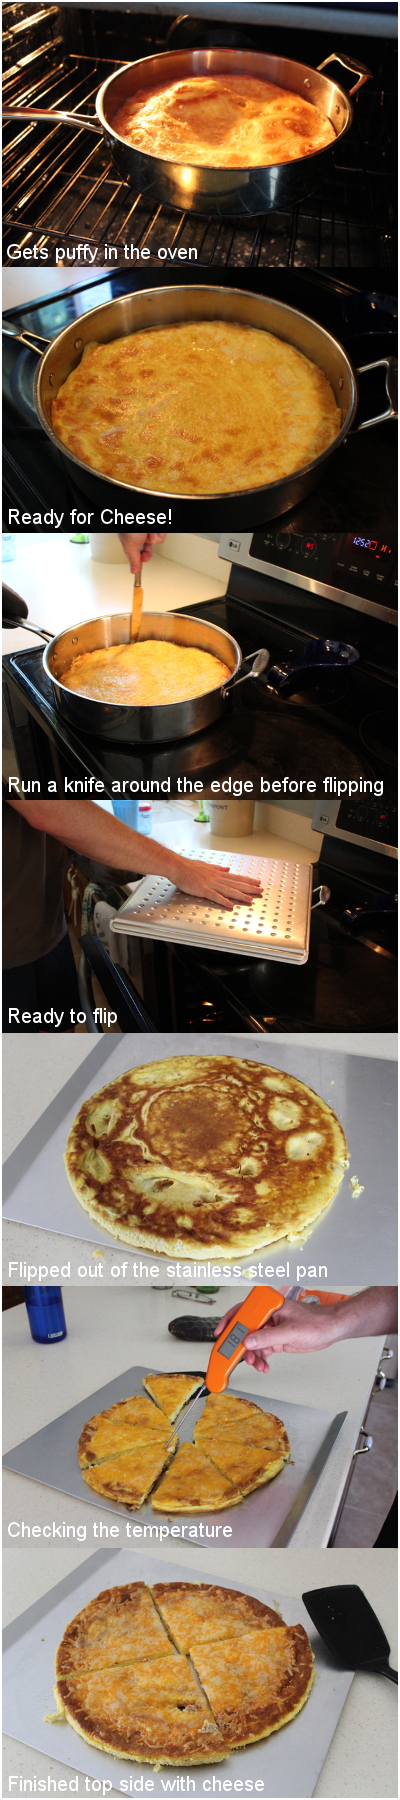 Photo Instructions for Egg Frittata